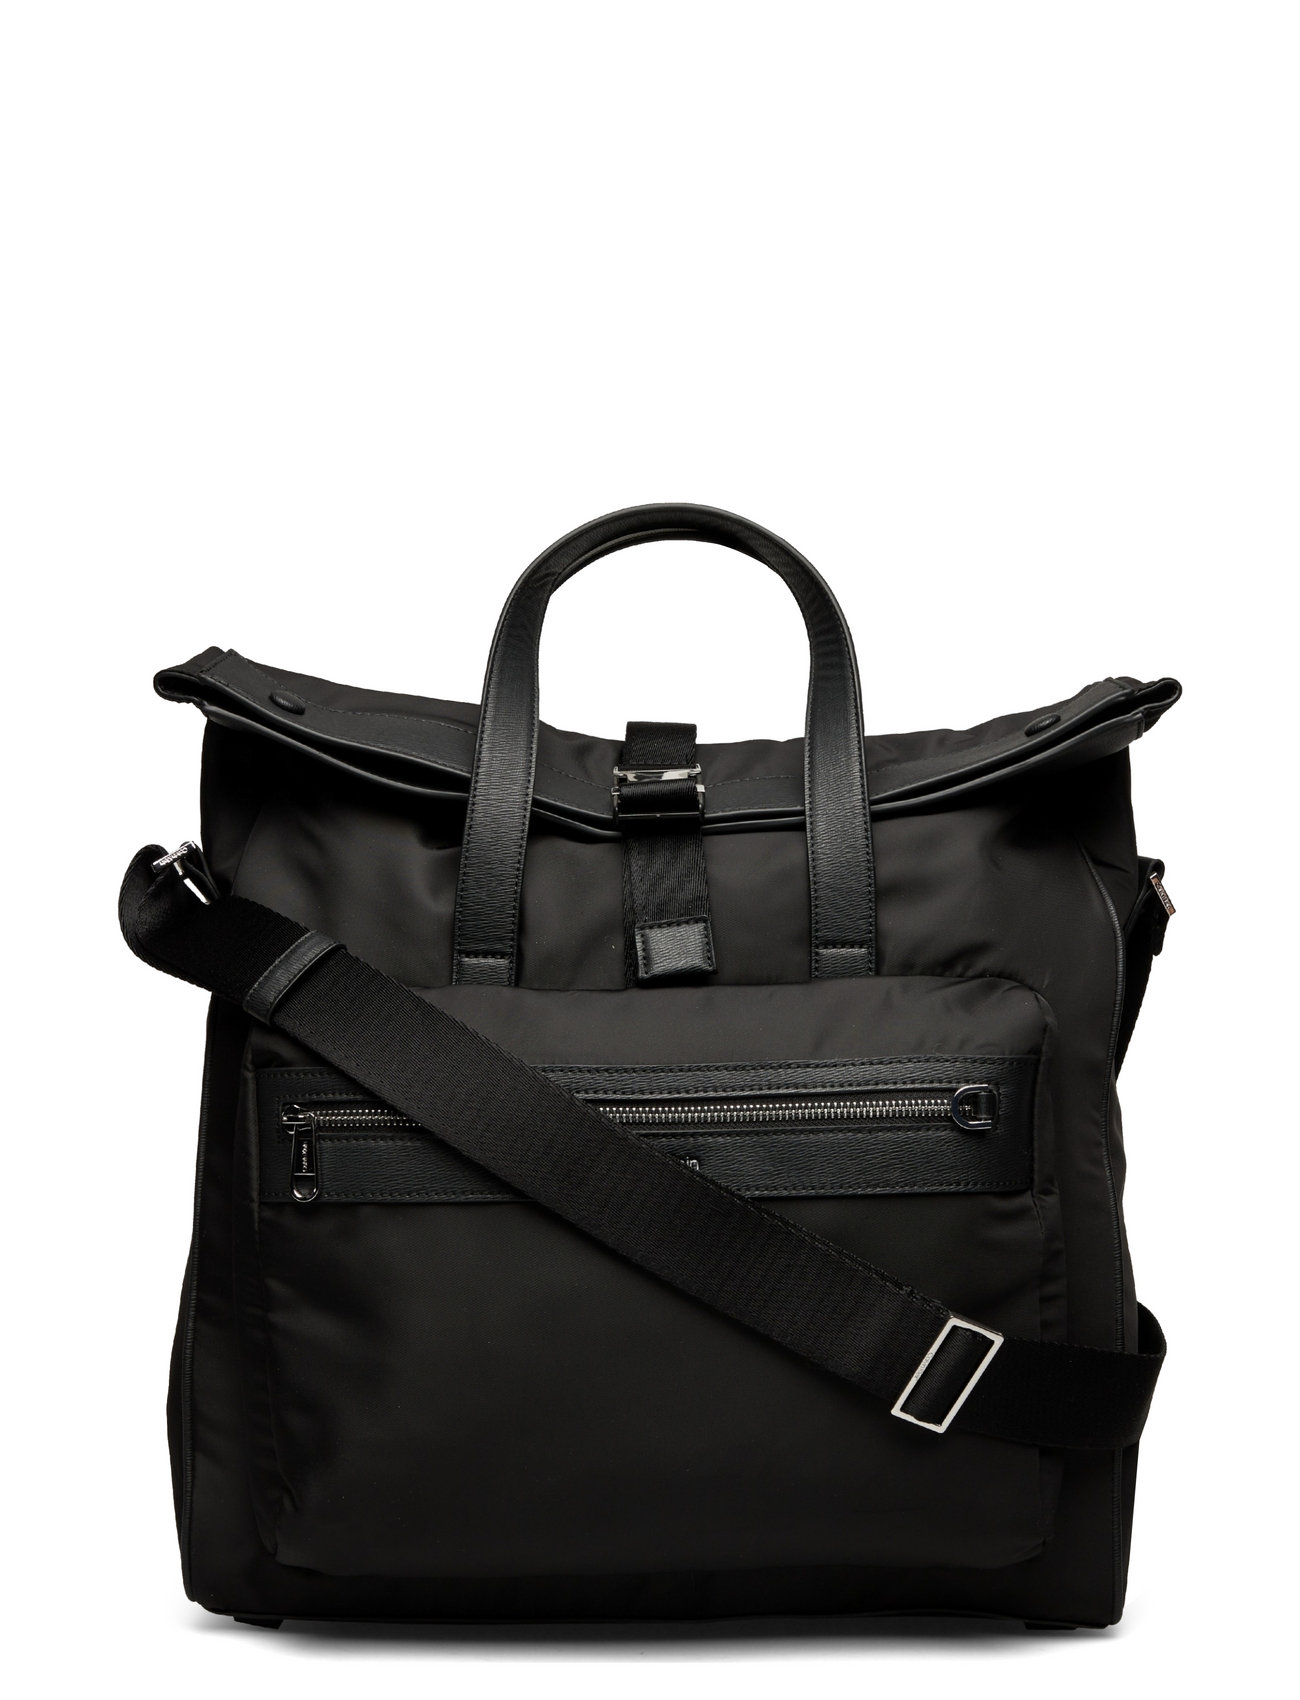 Calvin Klein Ck Elevated Messenger Tote - Shoulder bags - Boozt.com